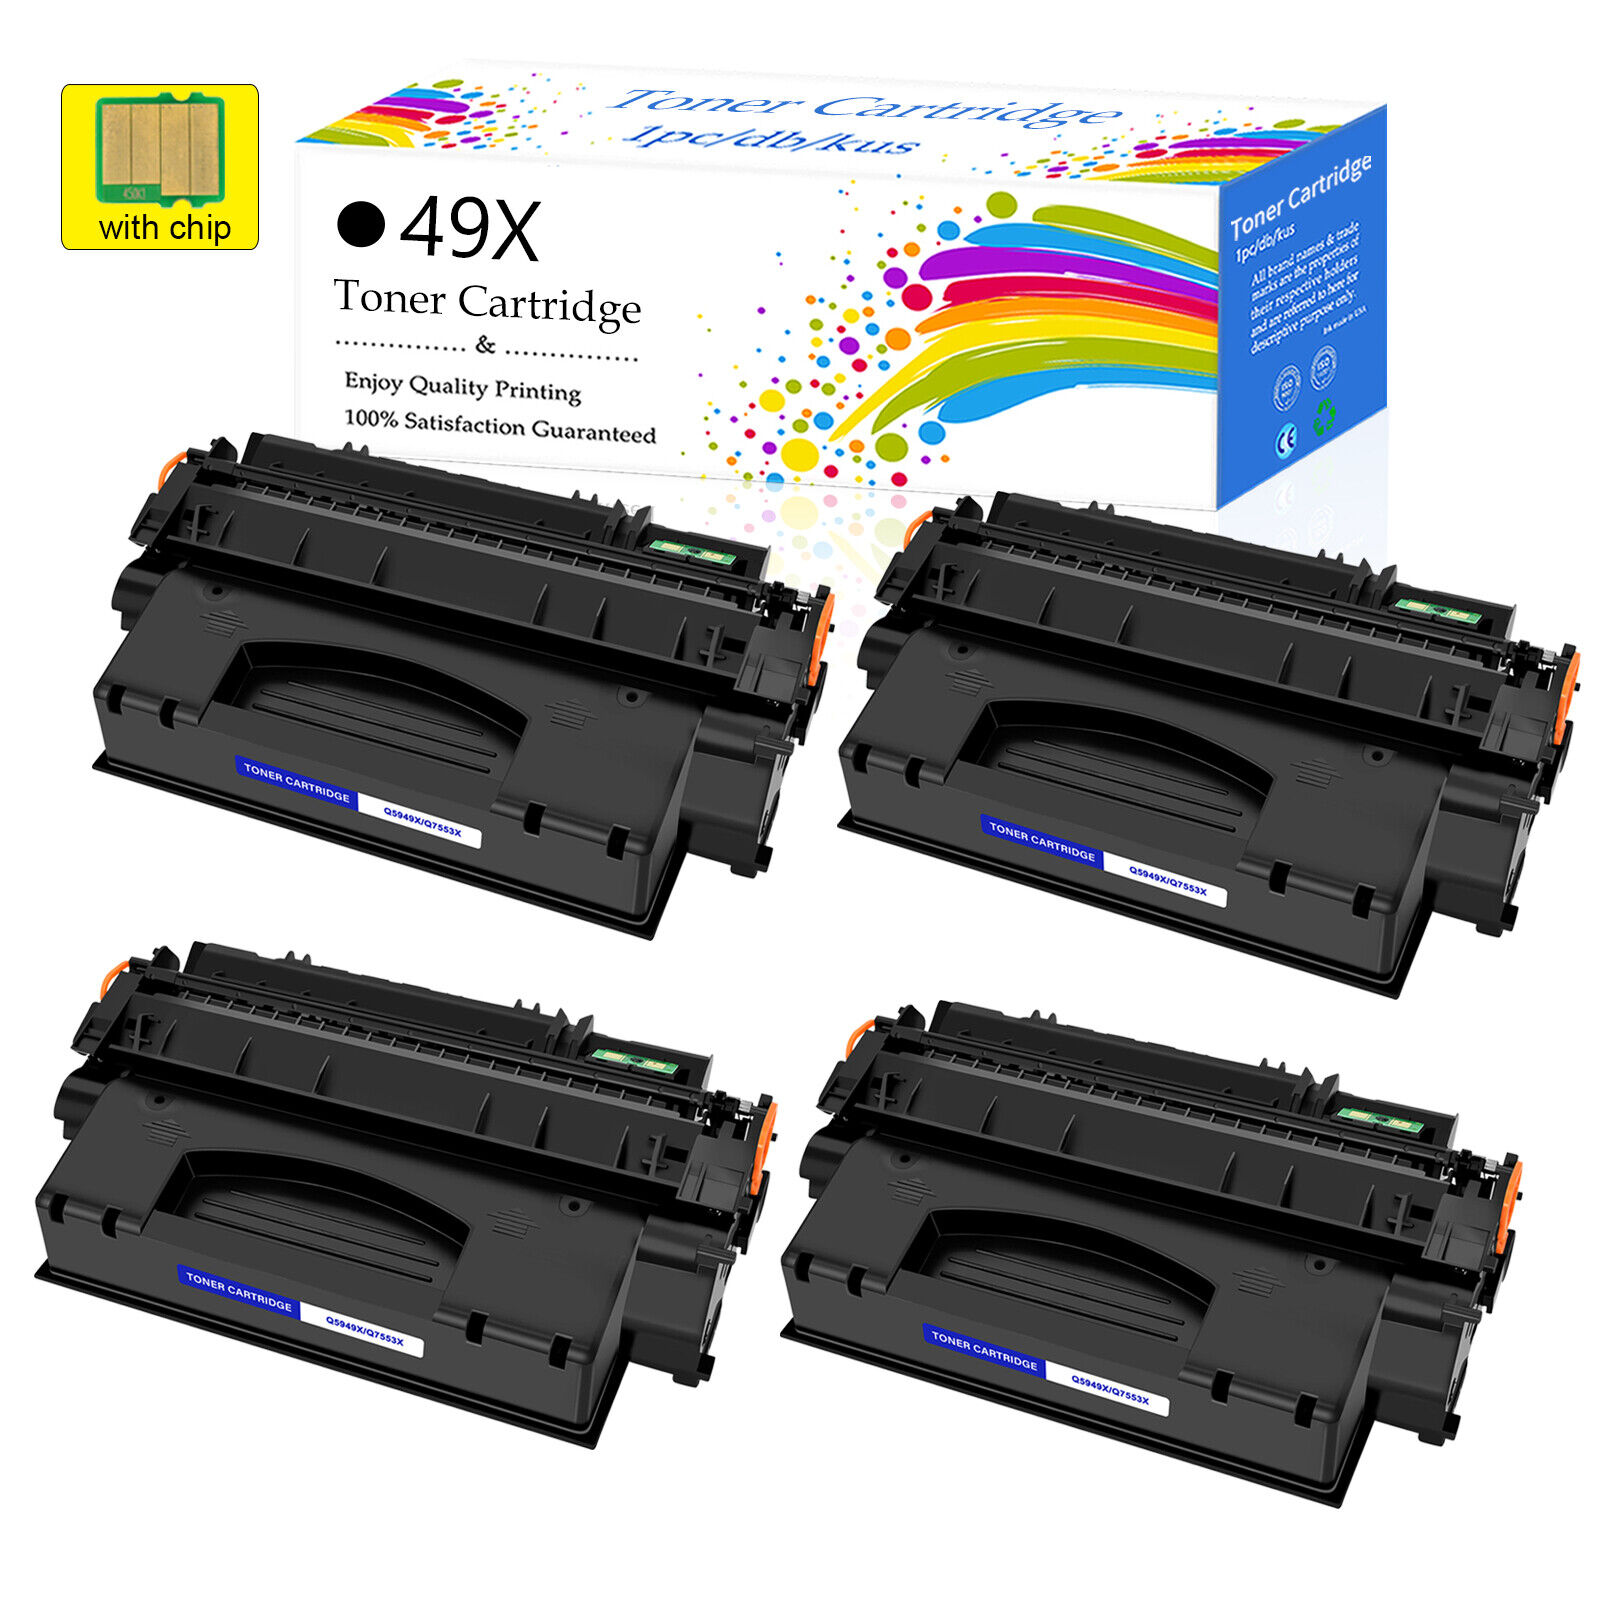 4 PK Q5949X Toner Cartridge Replacement For HP 49X LaserJet P2015dn P2015 Q7553X